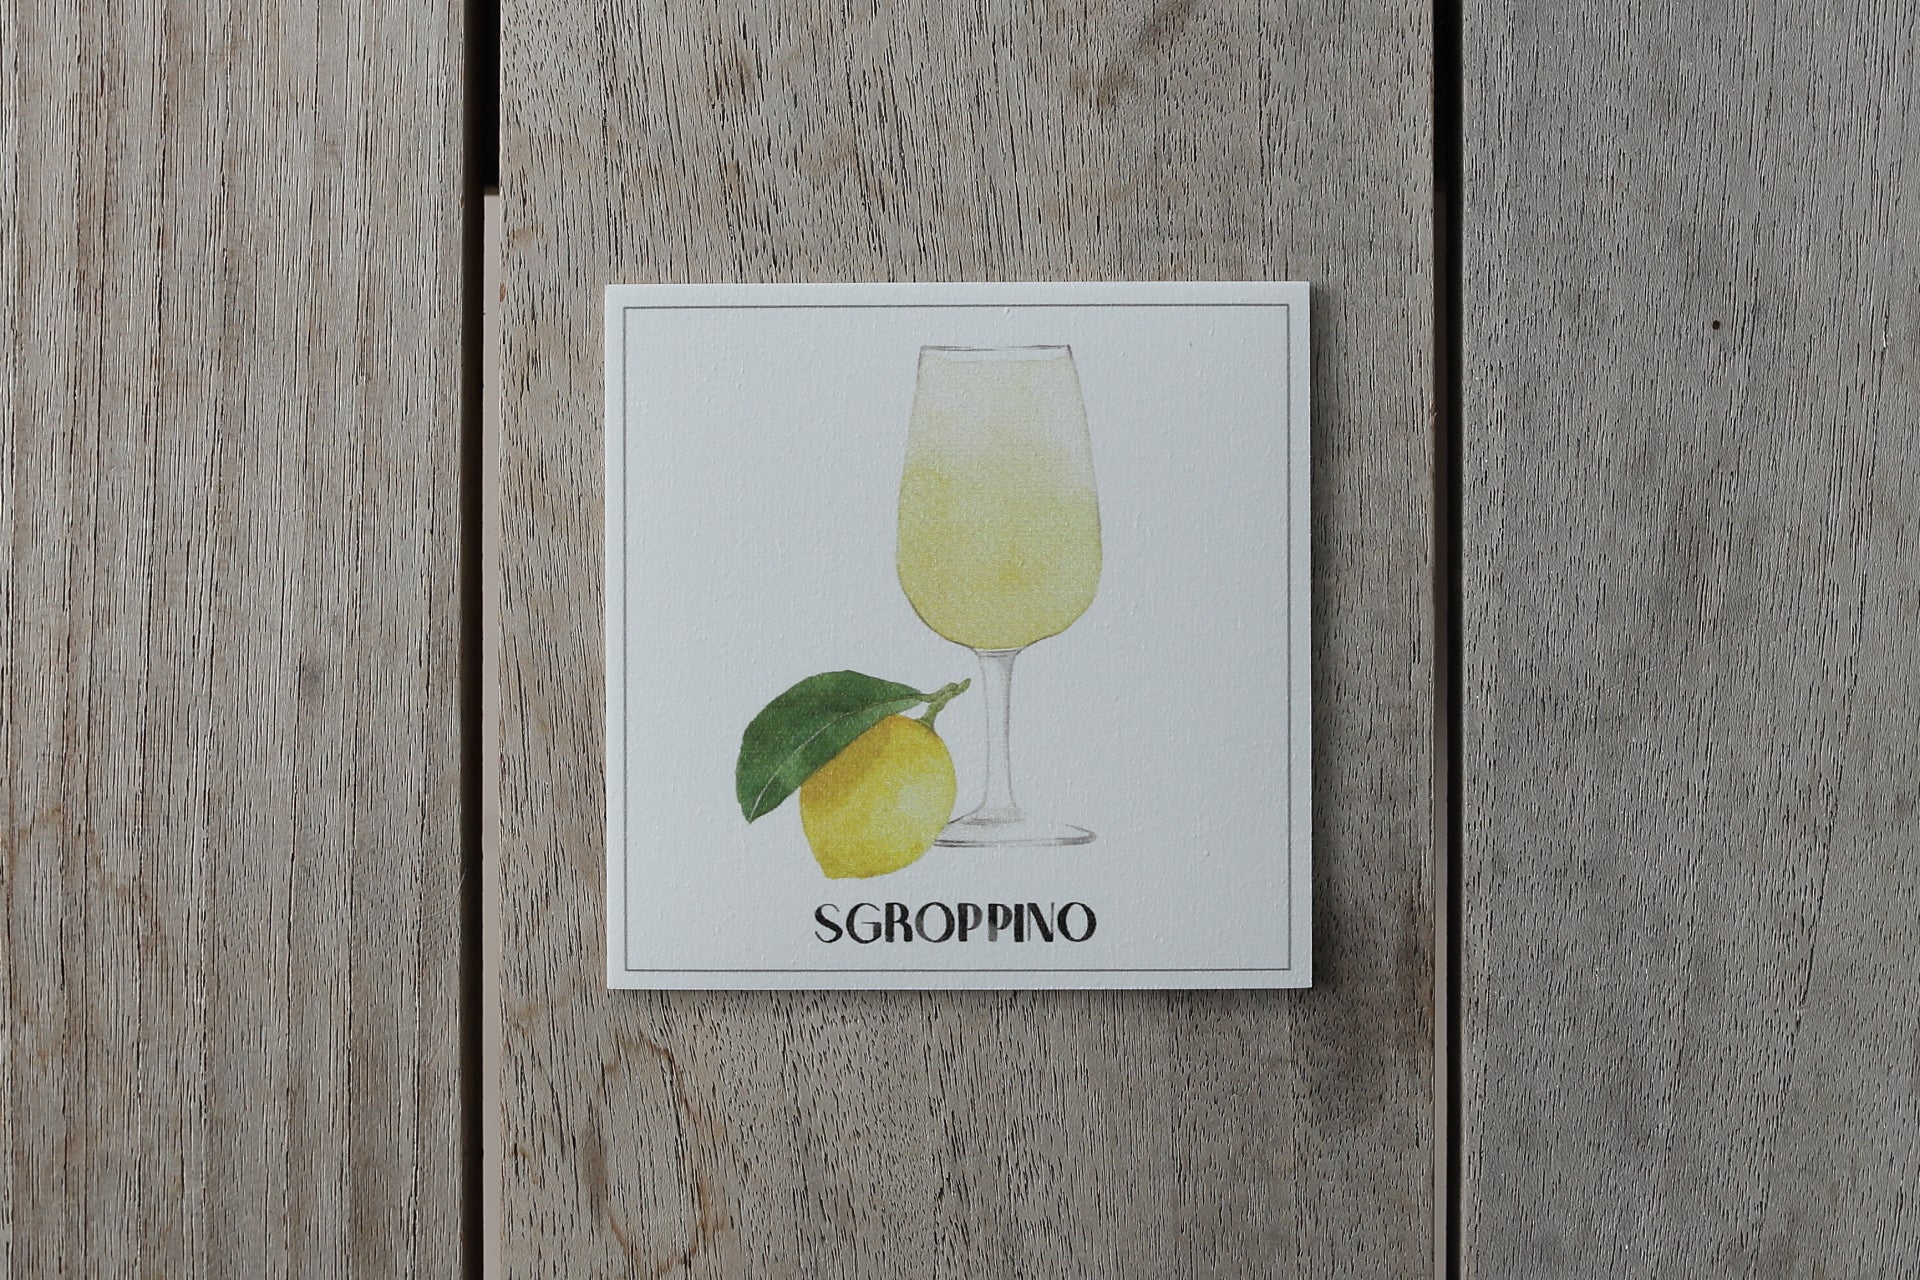 Collection Spritz - Sous-verres de Vinyle (4) / Vinyl Coasters (4) - Spritz Sgroppino